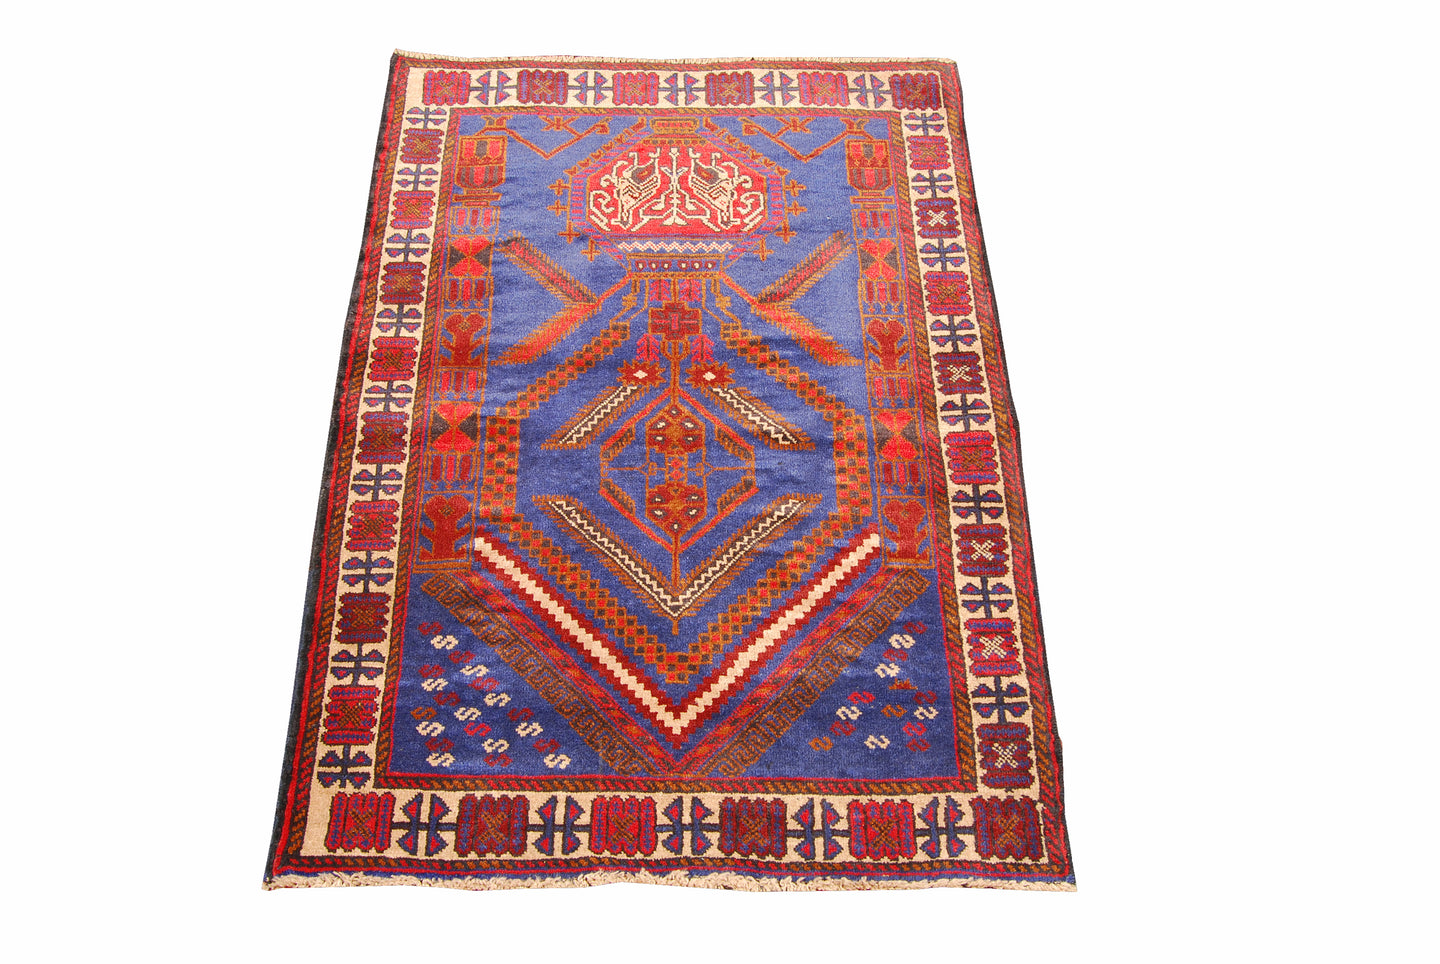 Genuine, Original Pure Wool Rug Rustic Handmad Carpet CM 124x90